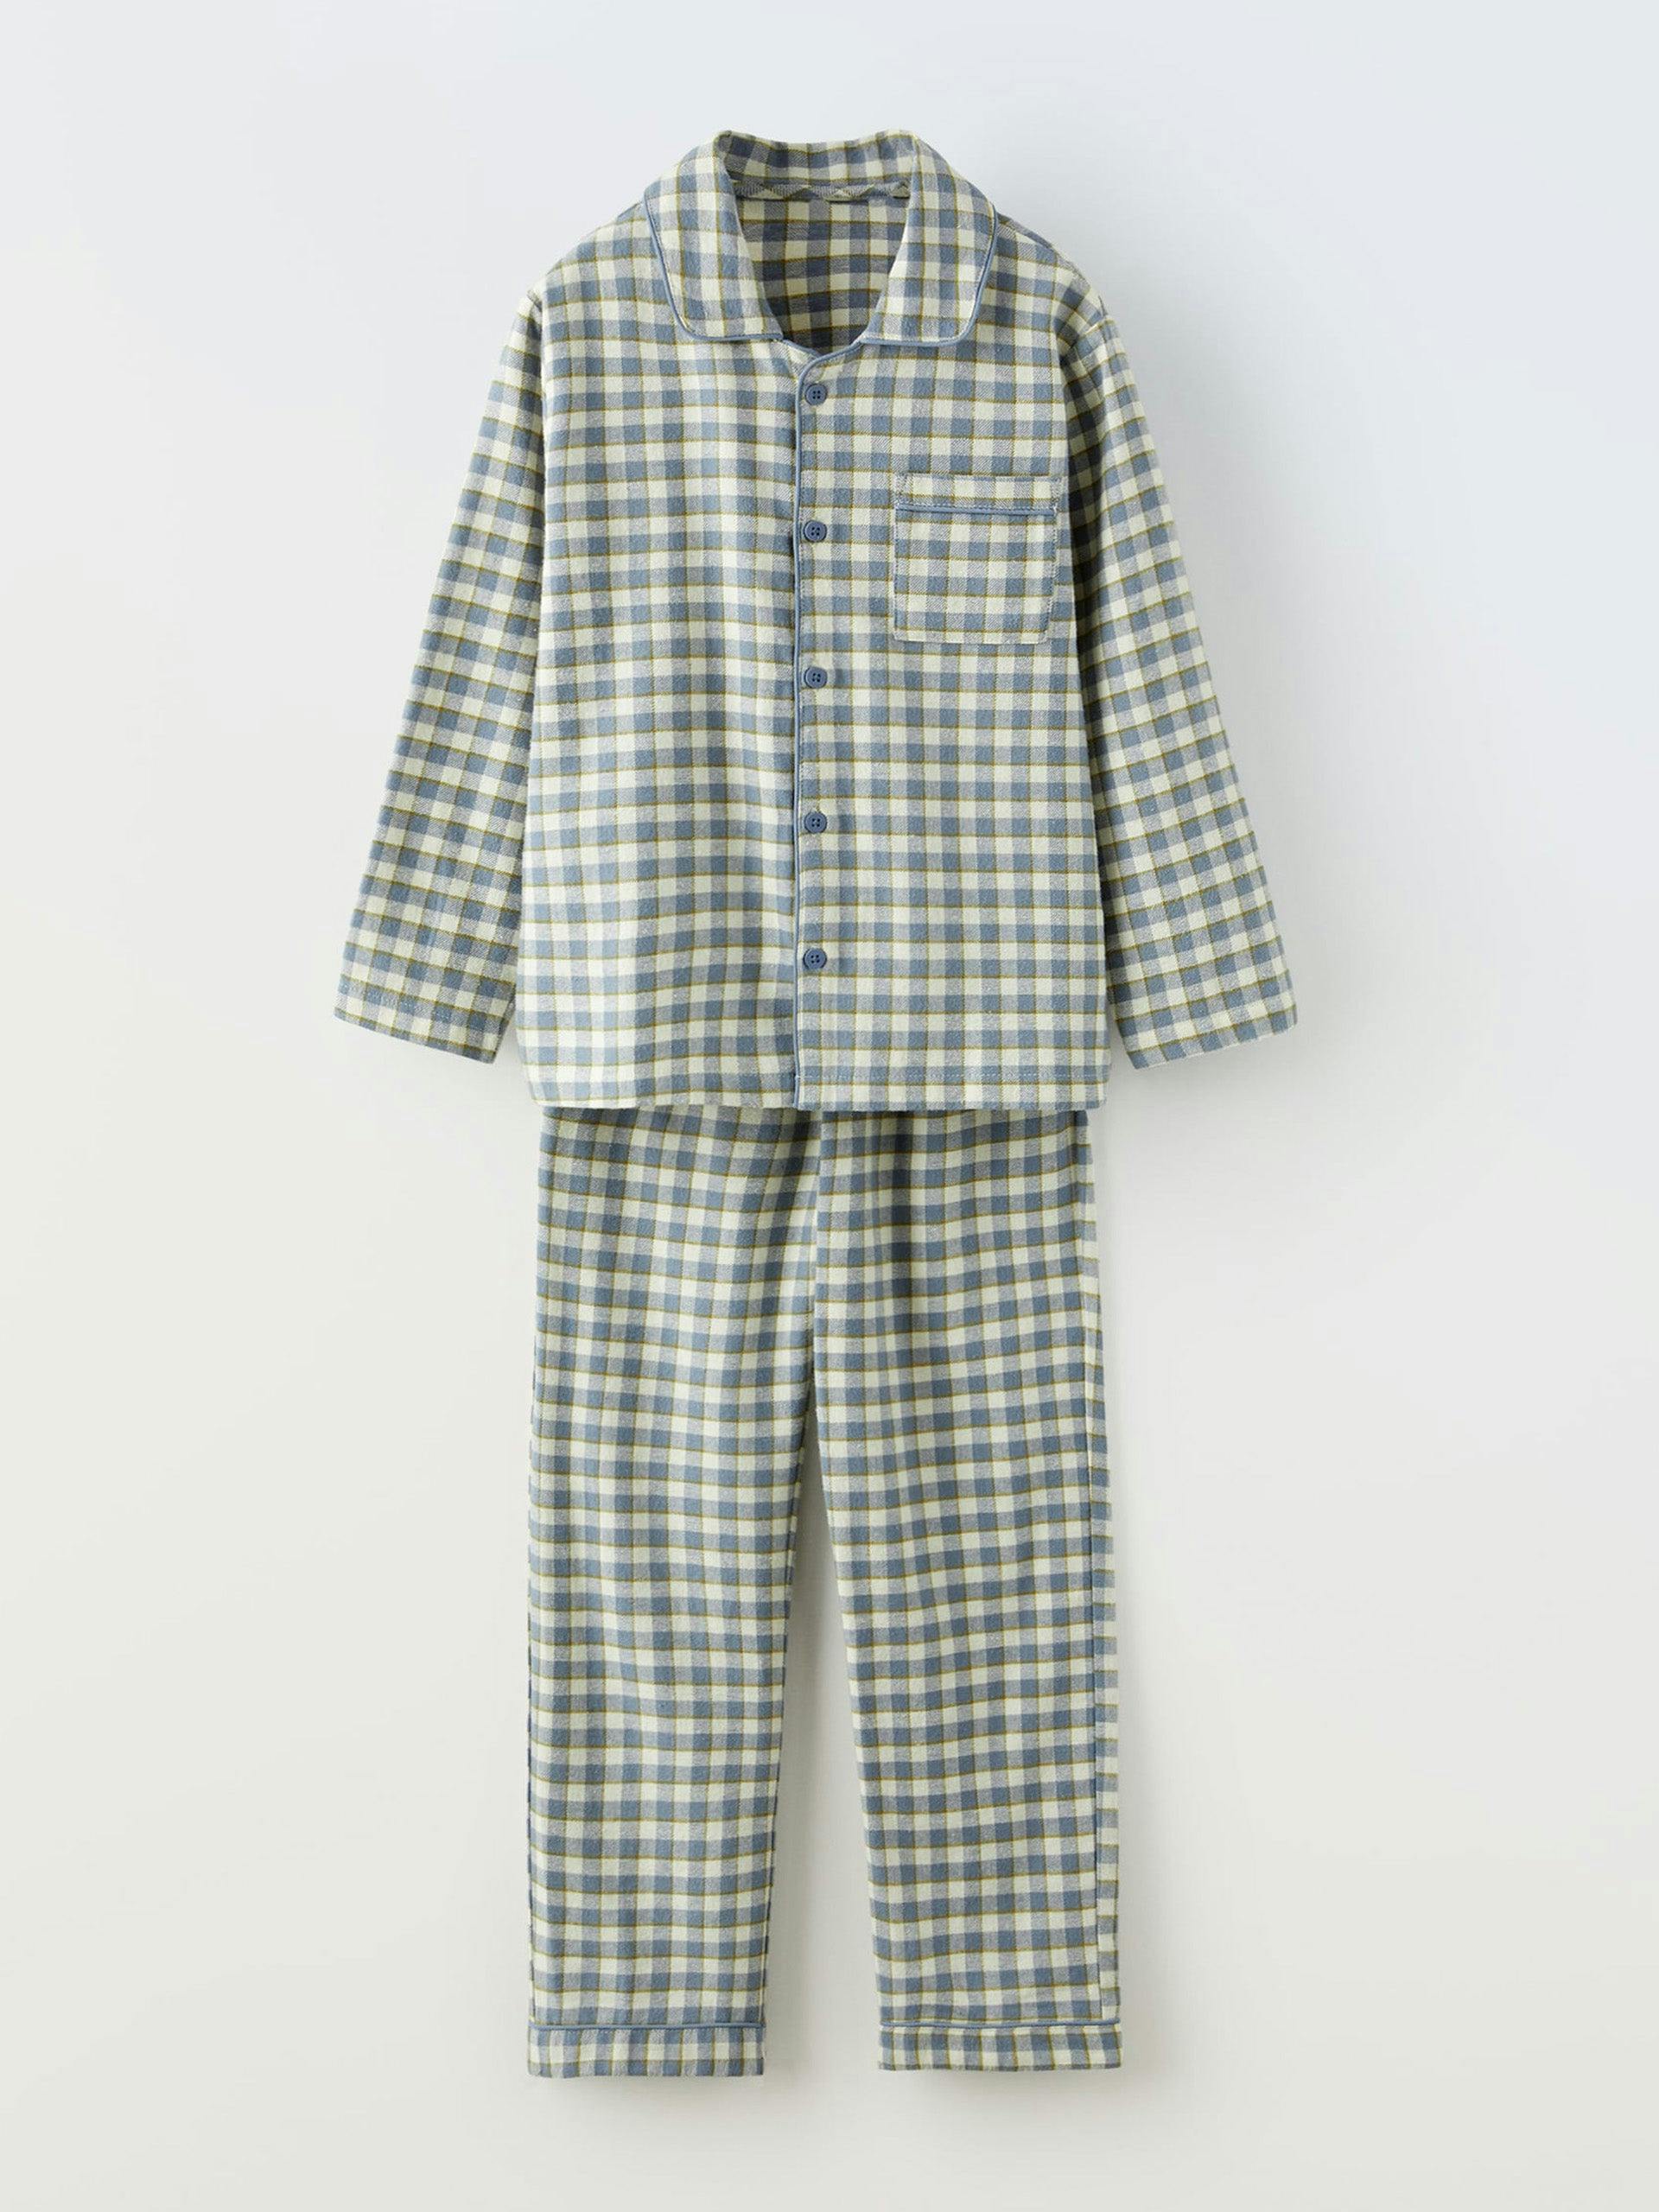 Gingham flannel pyjamas